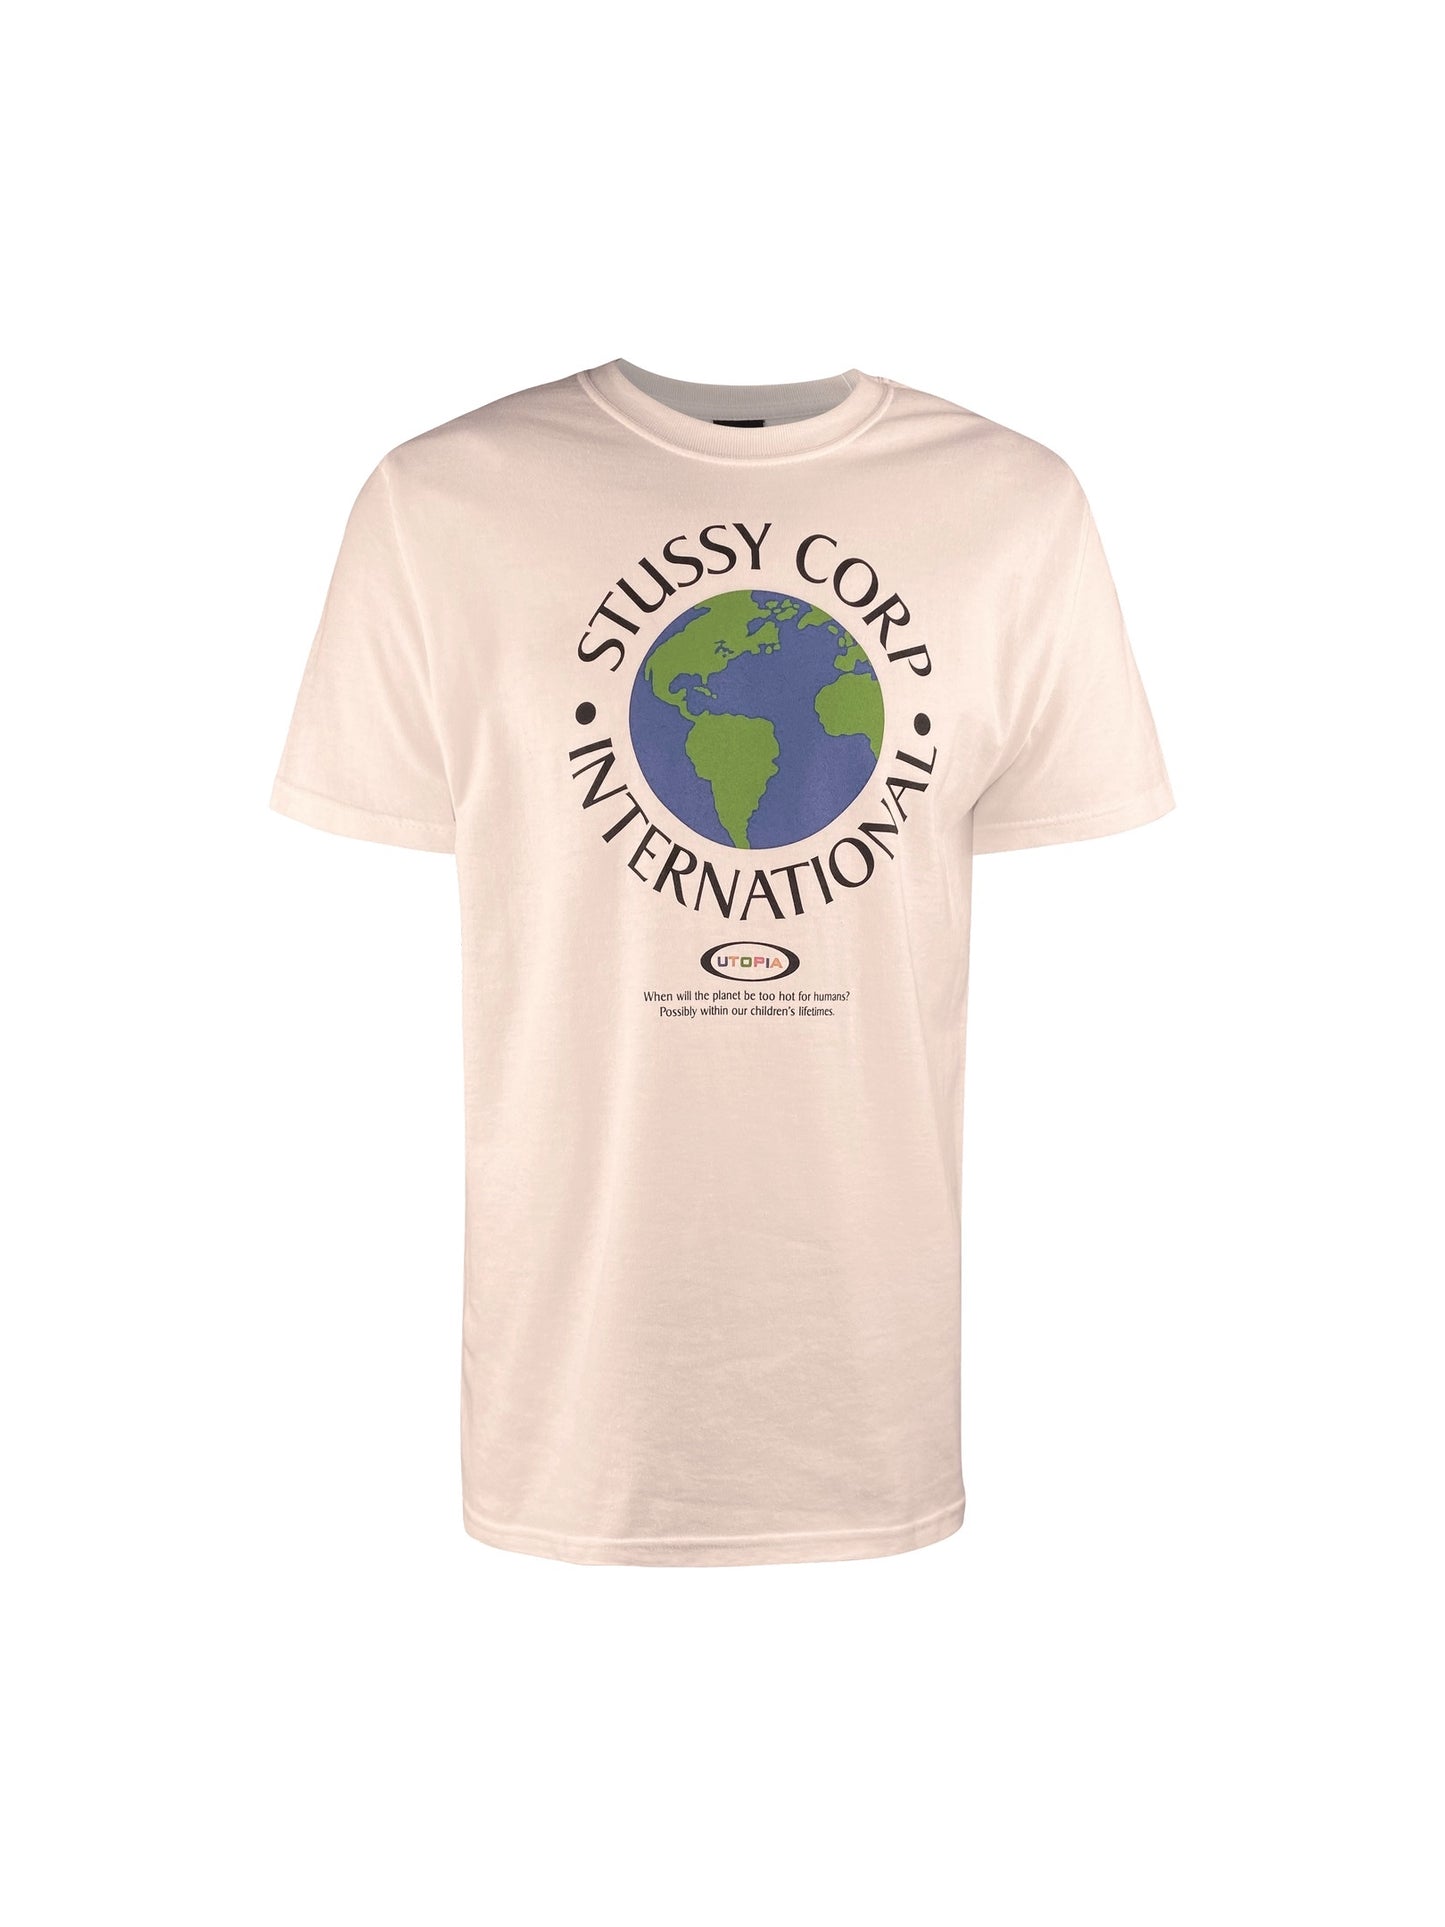 Stüssy T-Shirt “Stussy Corp. International” -white